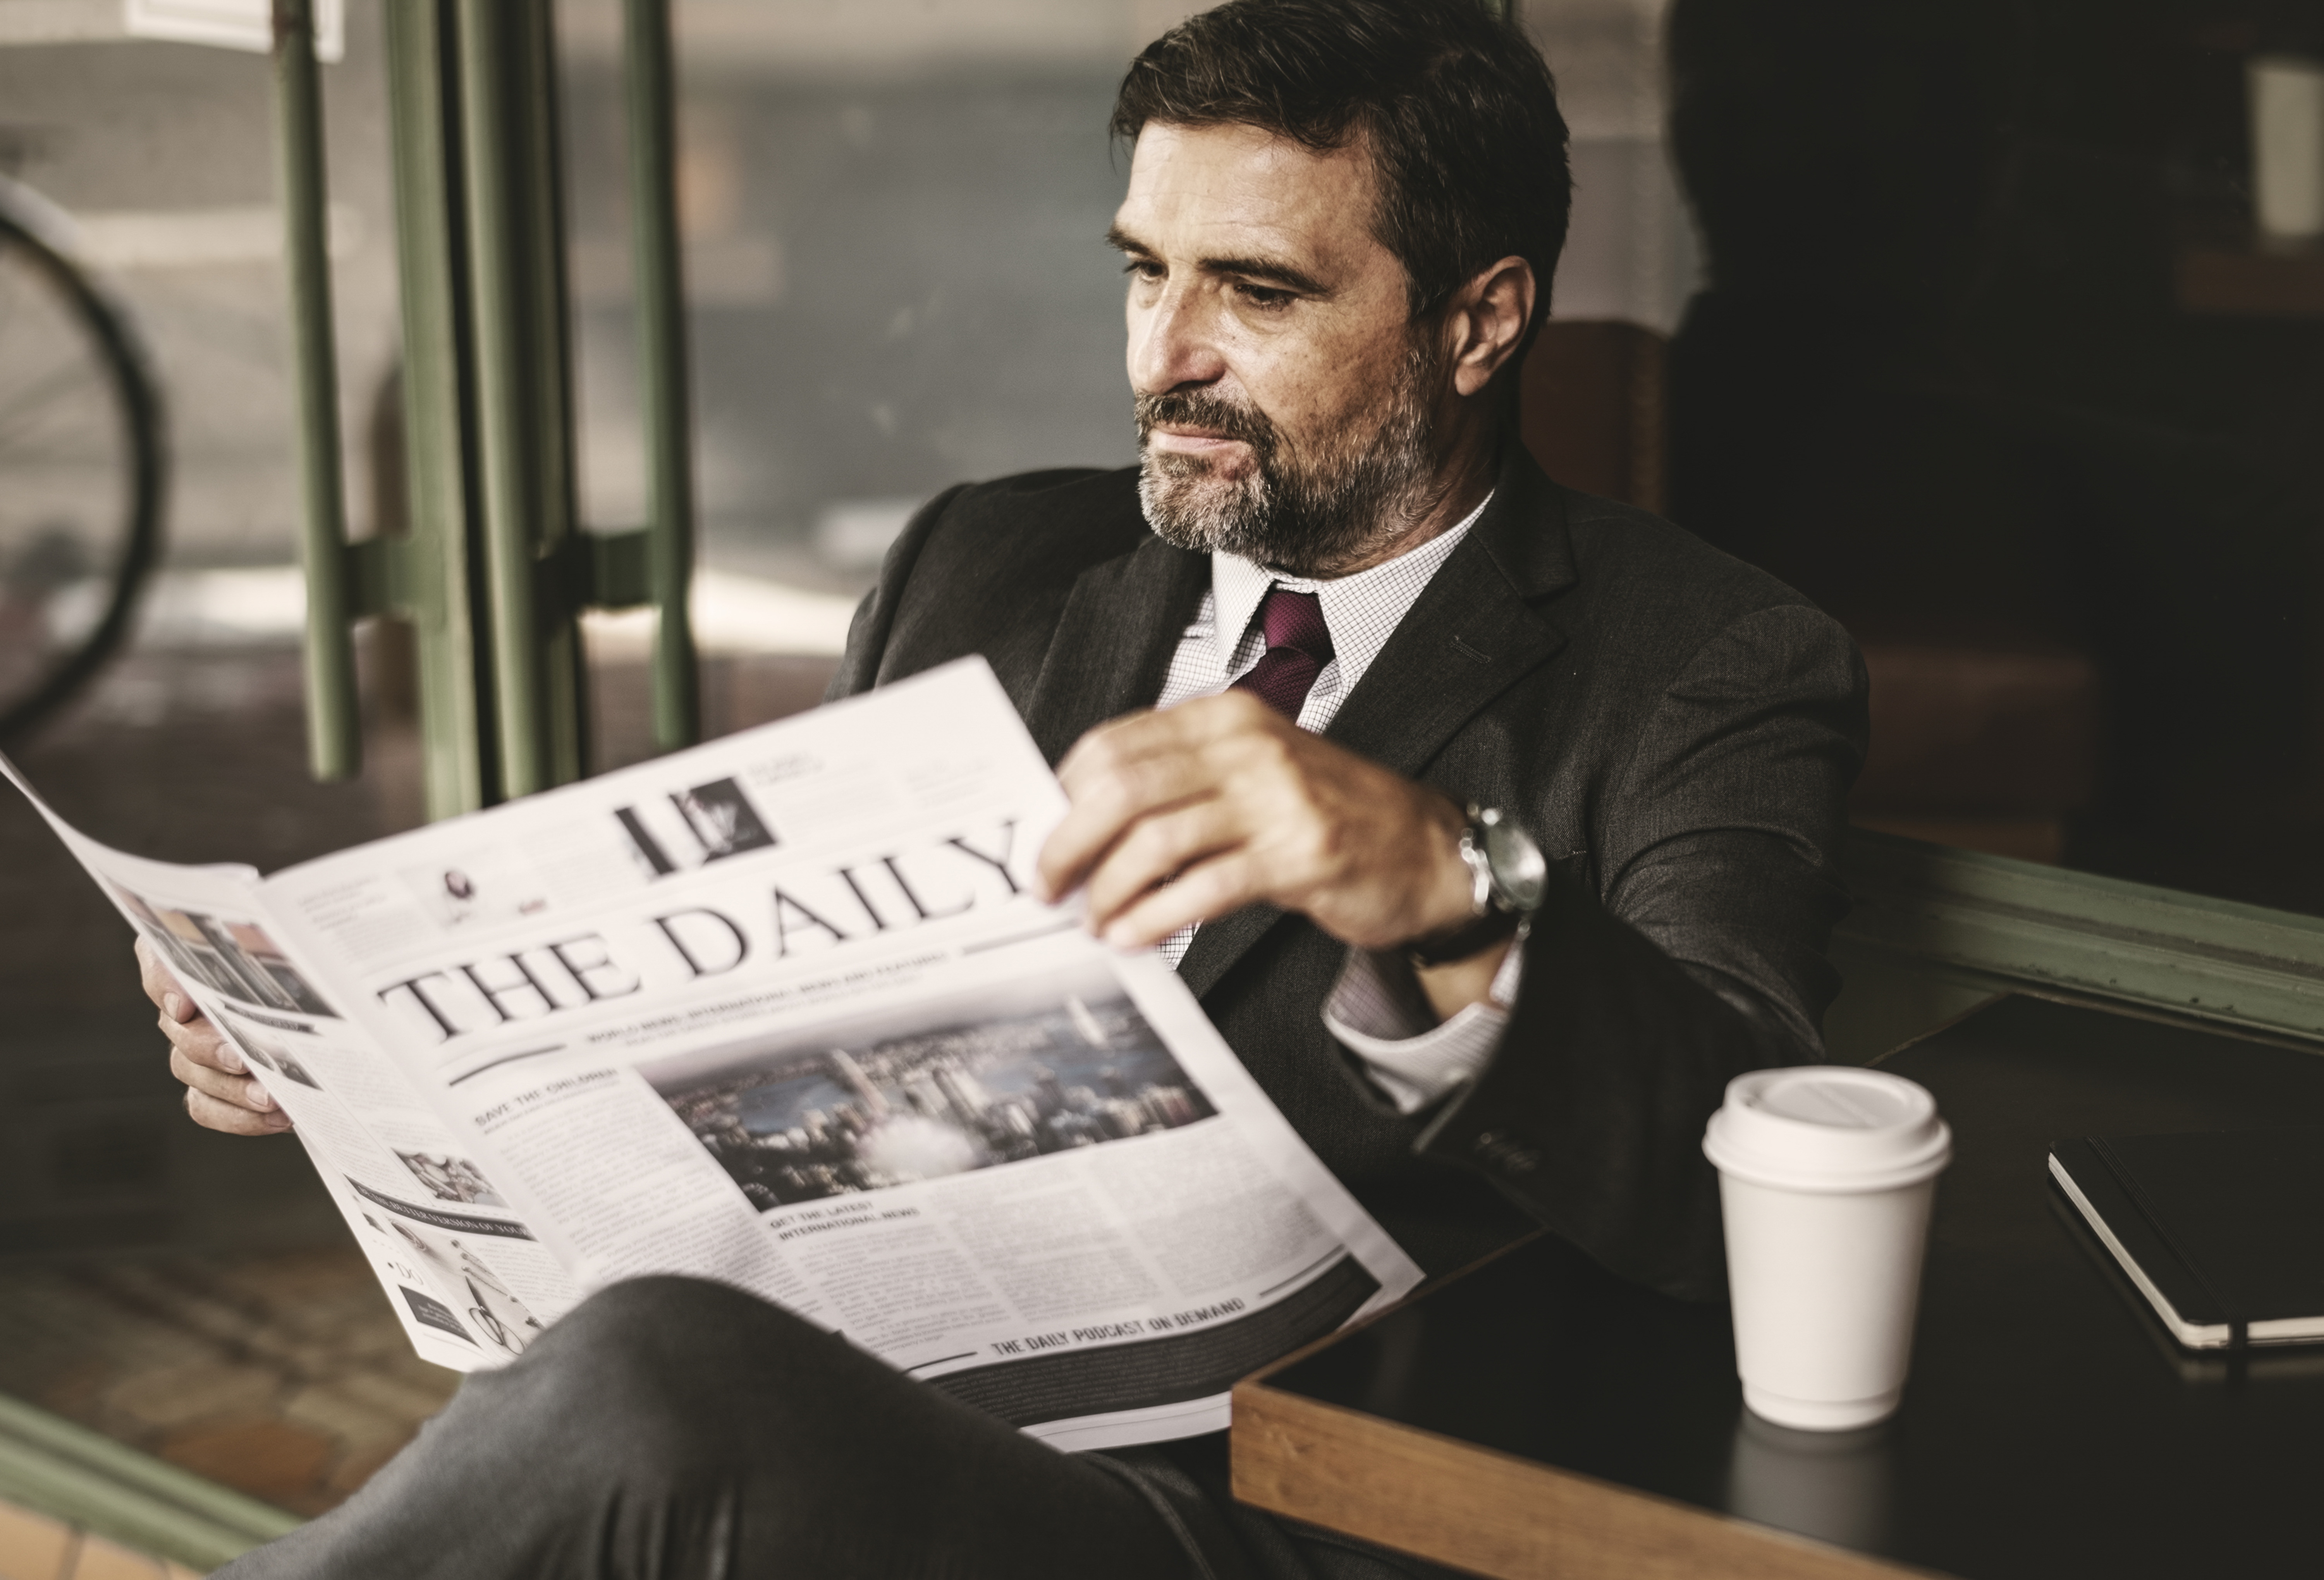 older man with salt and pepper beard reading newspaper